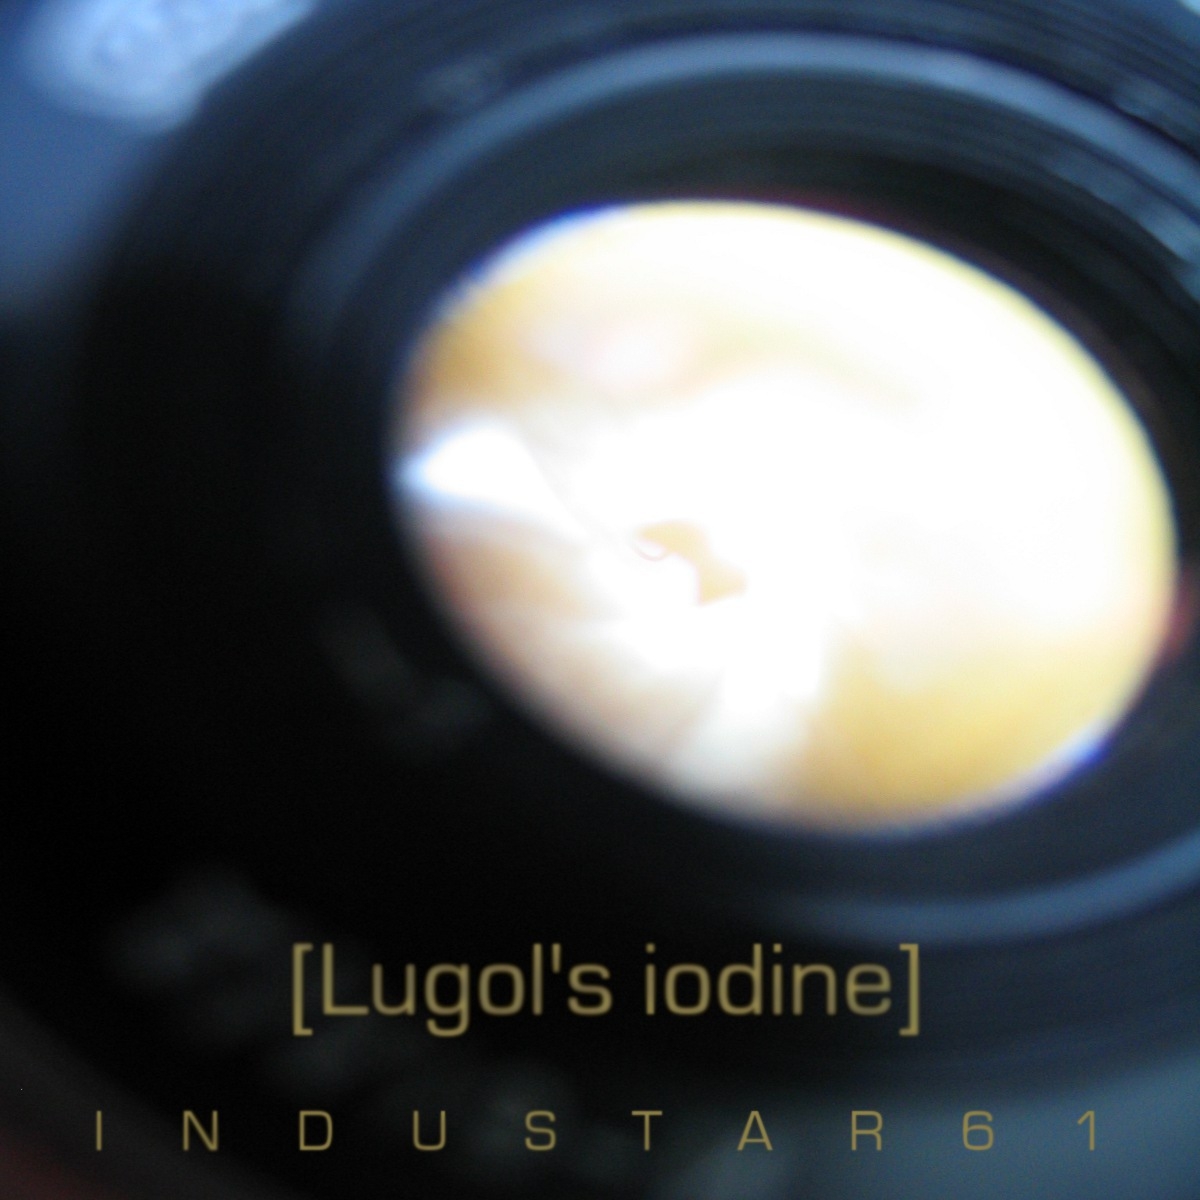 lugolsiodine_industar61